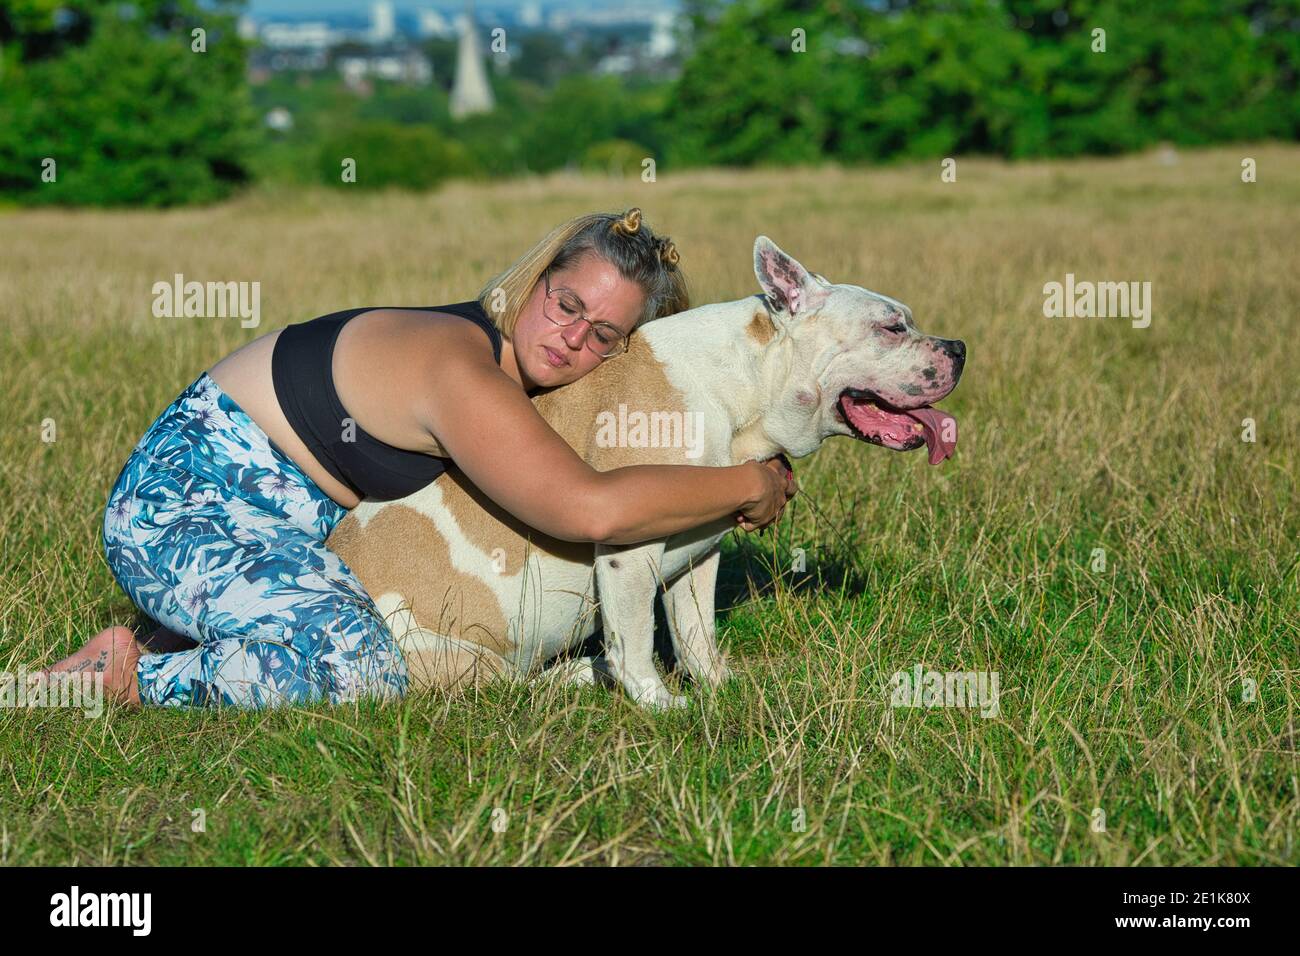 woman doing yoga with her dog .Doga yoga with your dog. Stock Photo